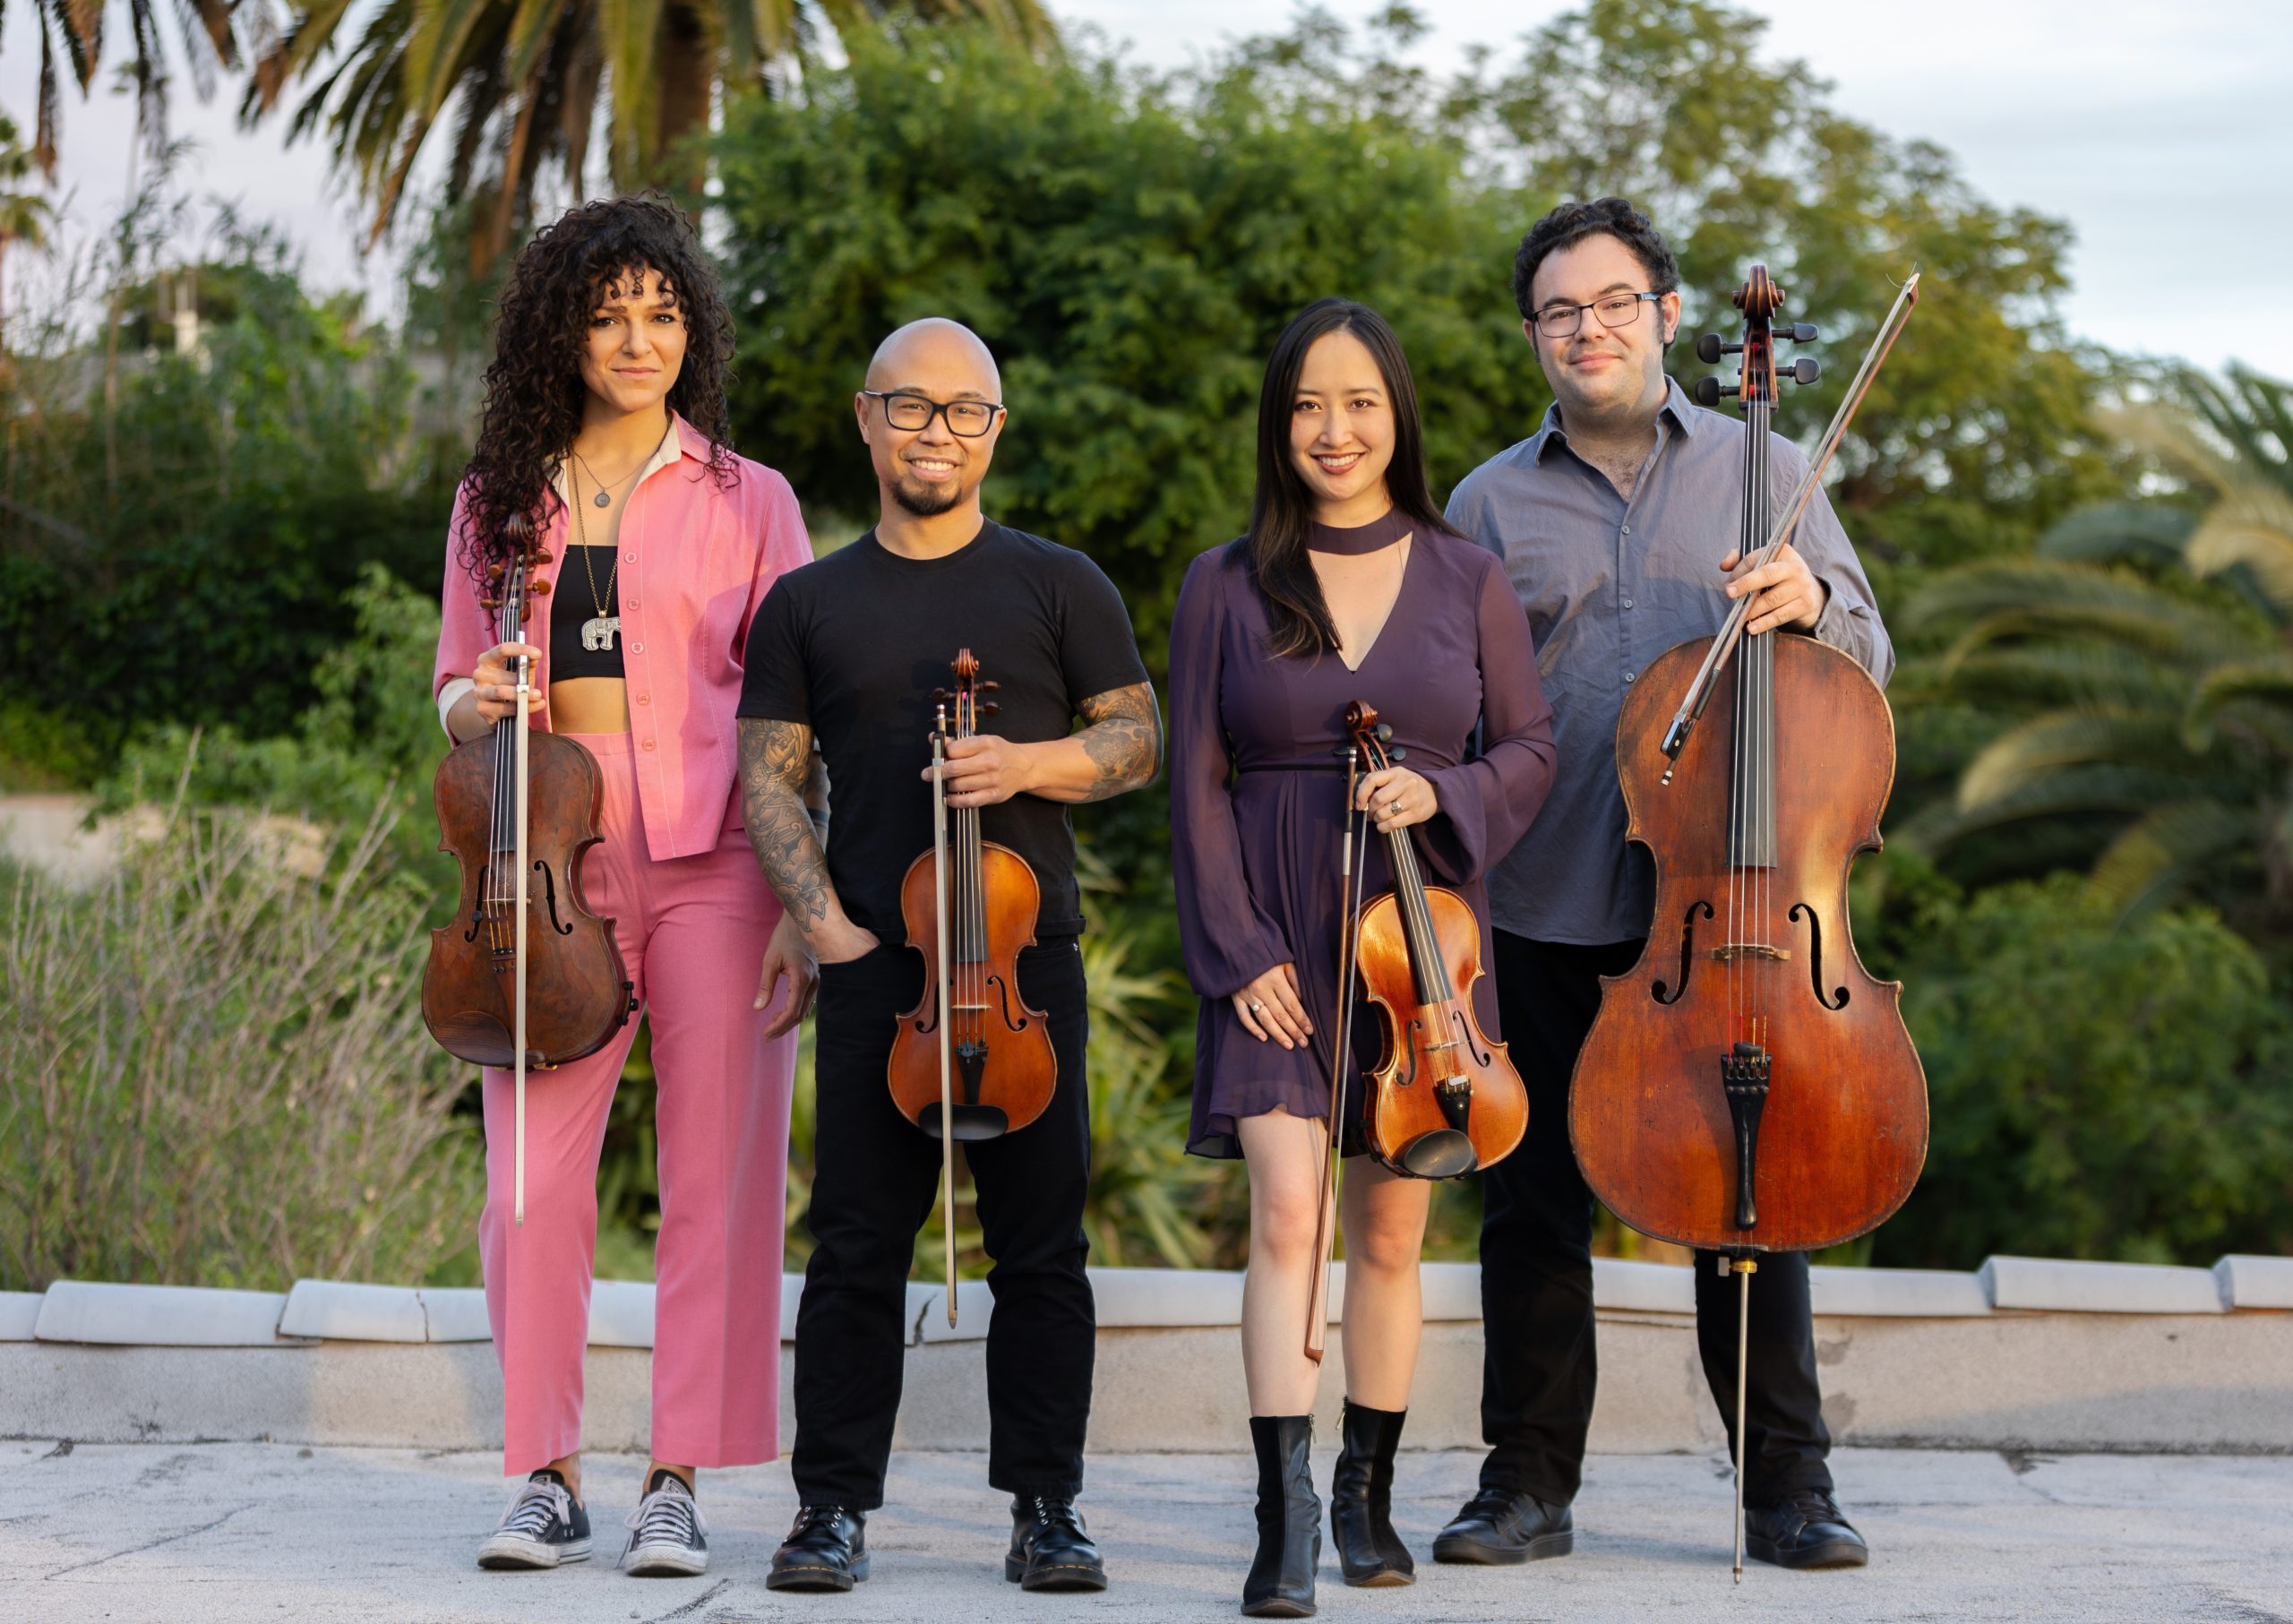 Vitamin String Quartet part of the group of musicians featured in Bridgerton.